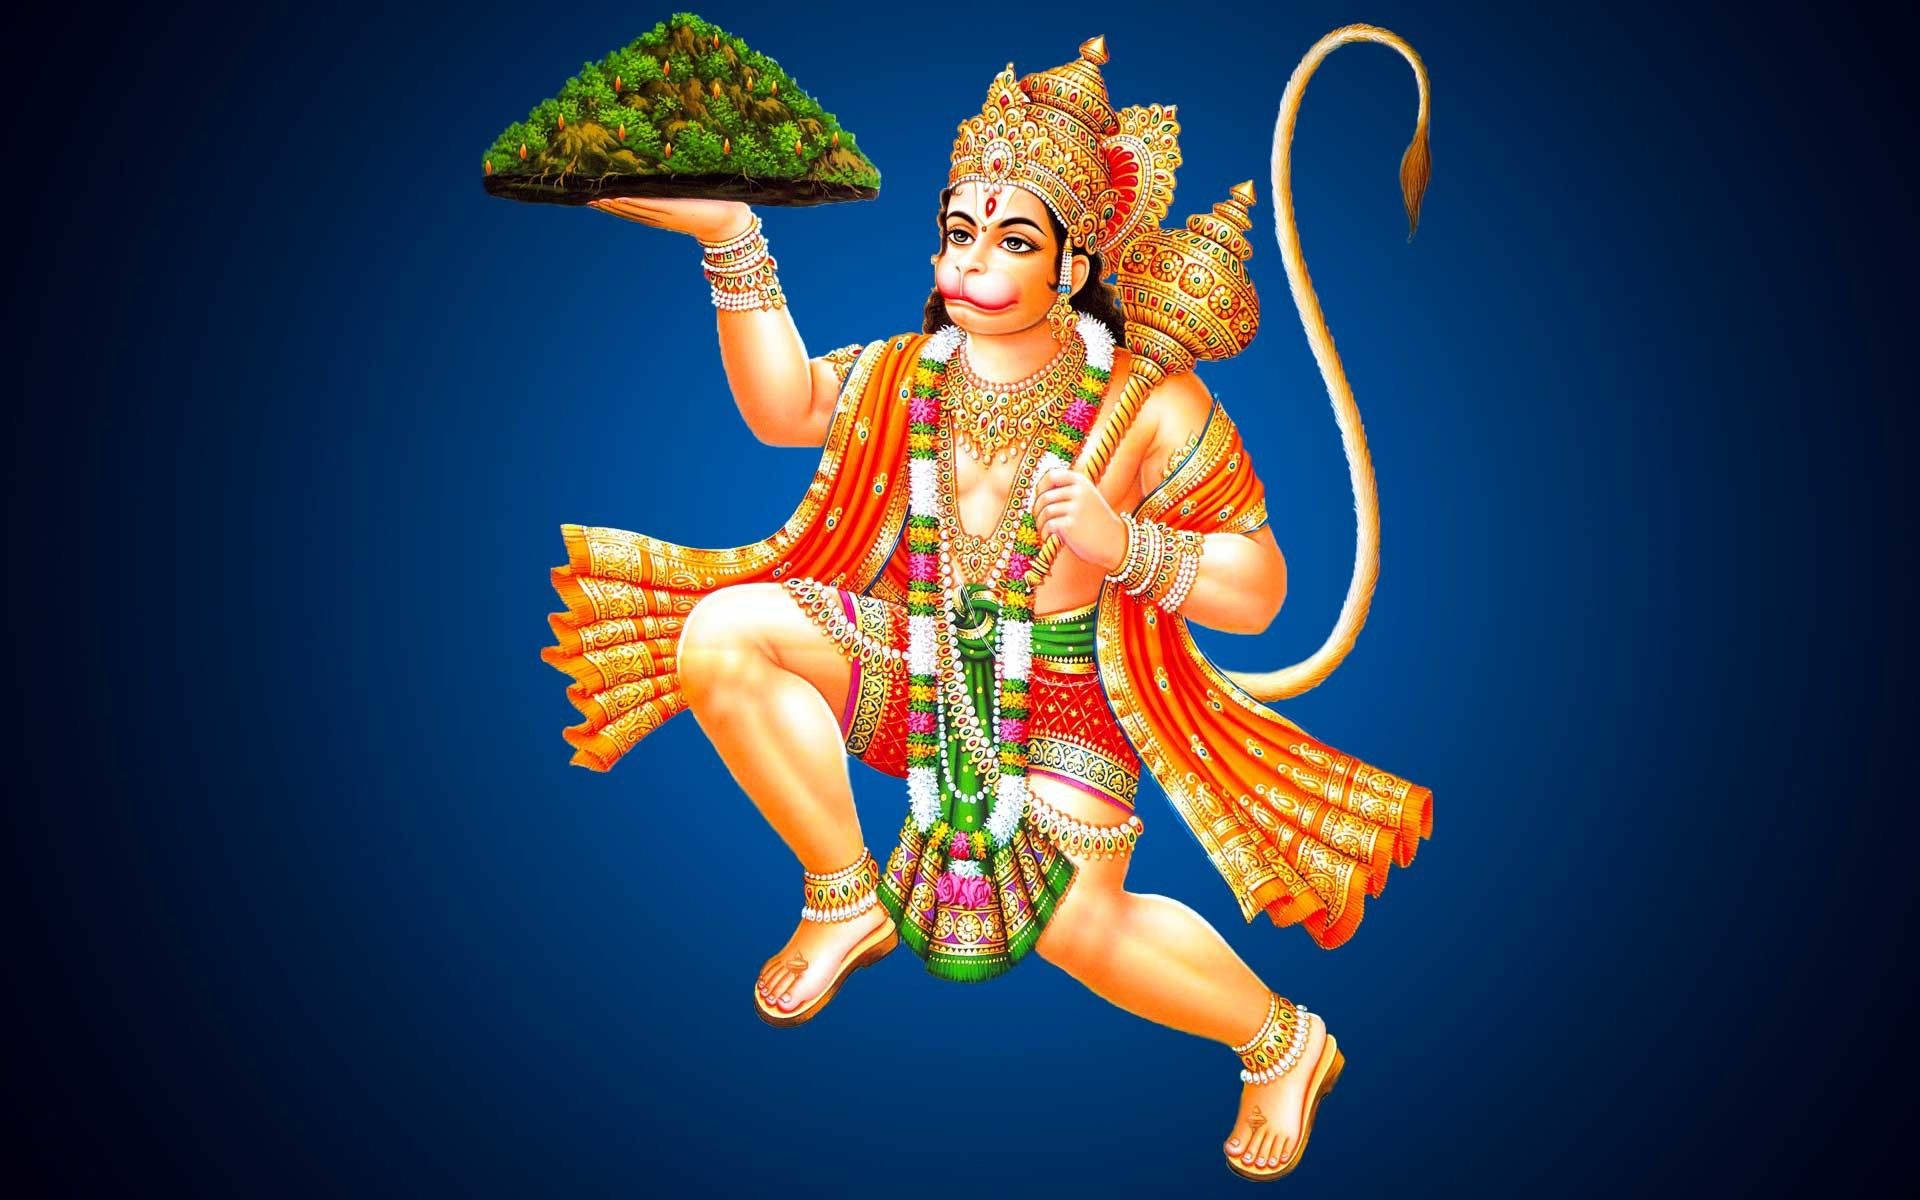 Free Hanuman Ji Hd Wallpaper Downloads, [100+] Hanuman Ji Hd Wallpapers for  FREE 